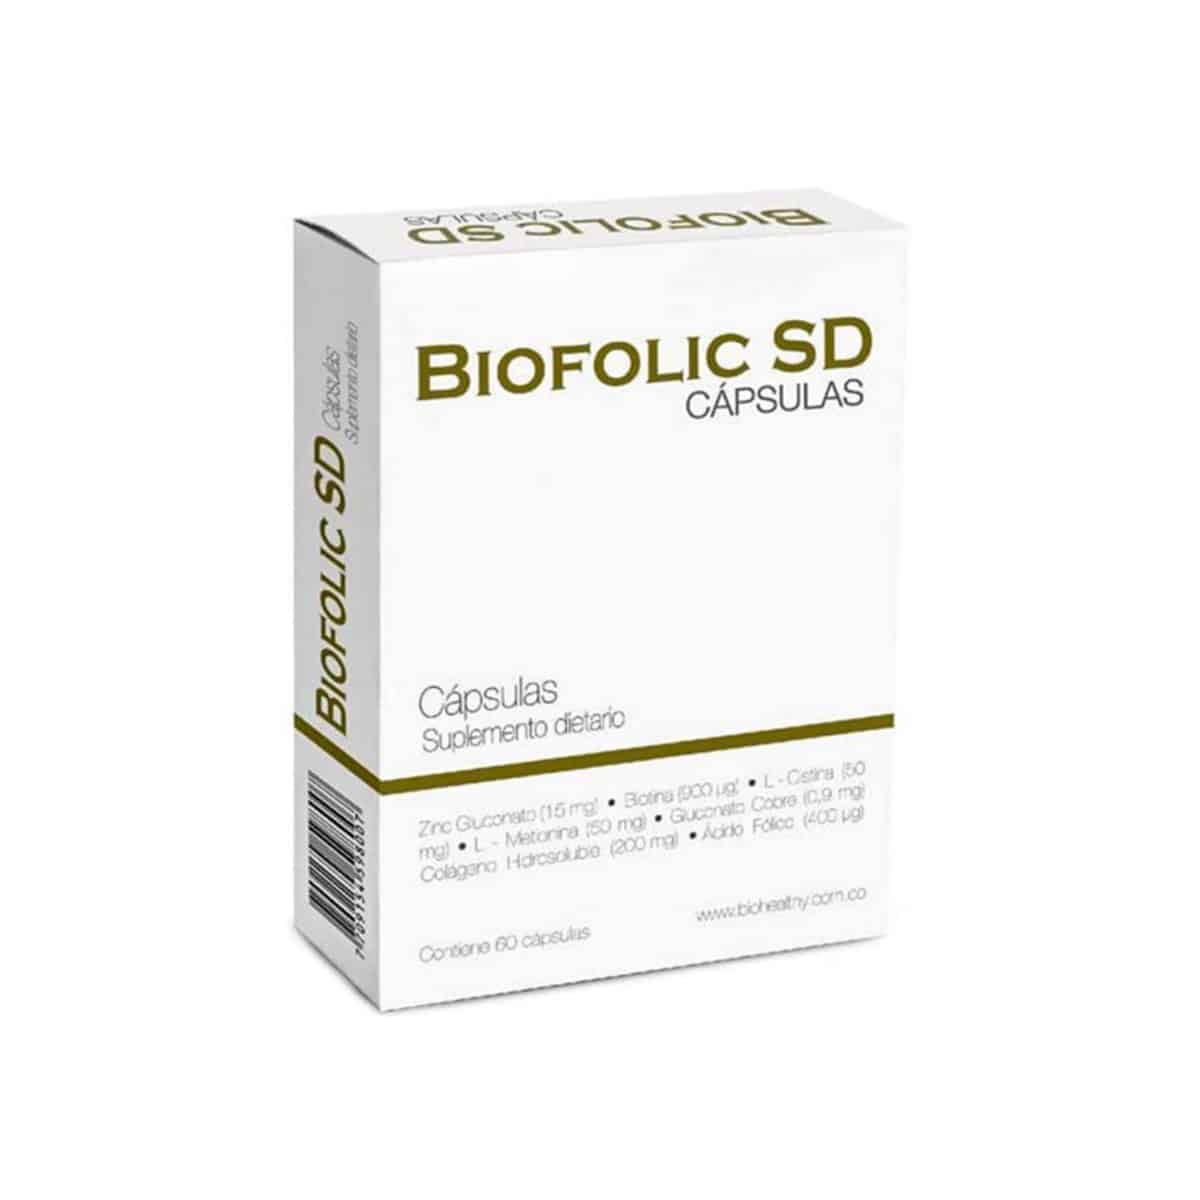 Biofolic Sd  Capsulas Biohealthy